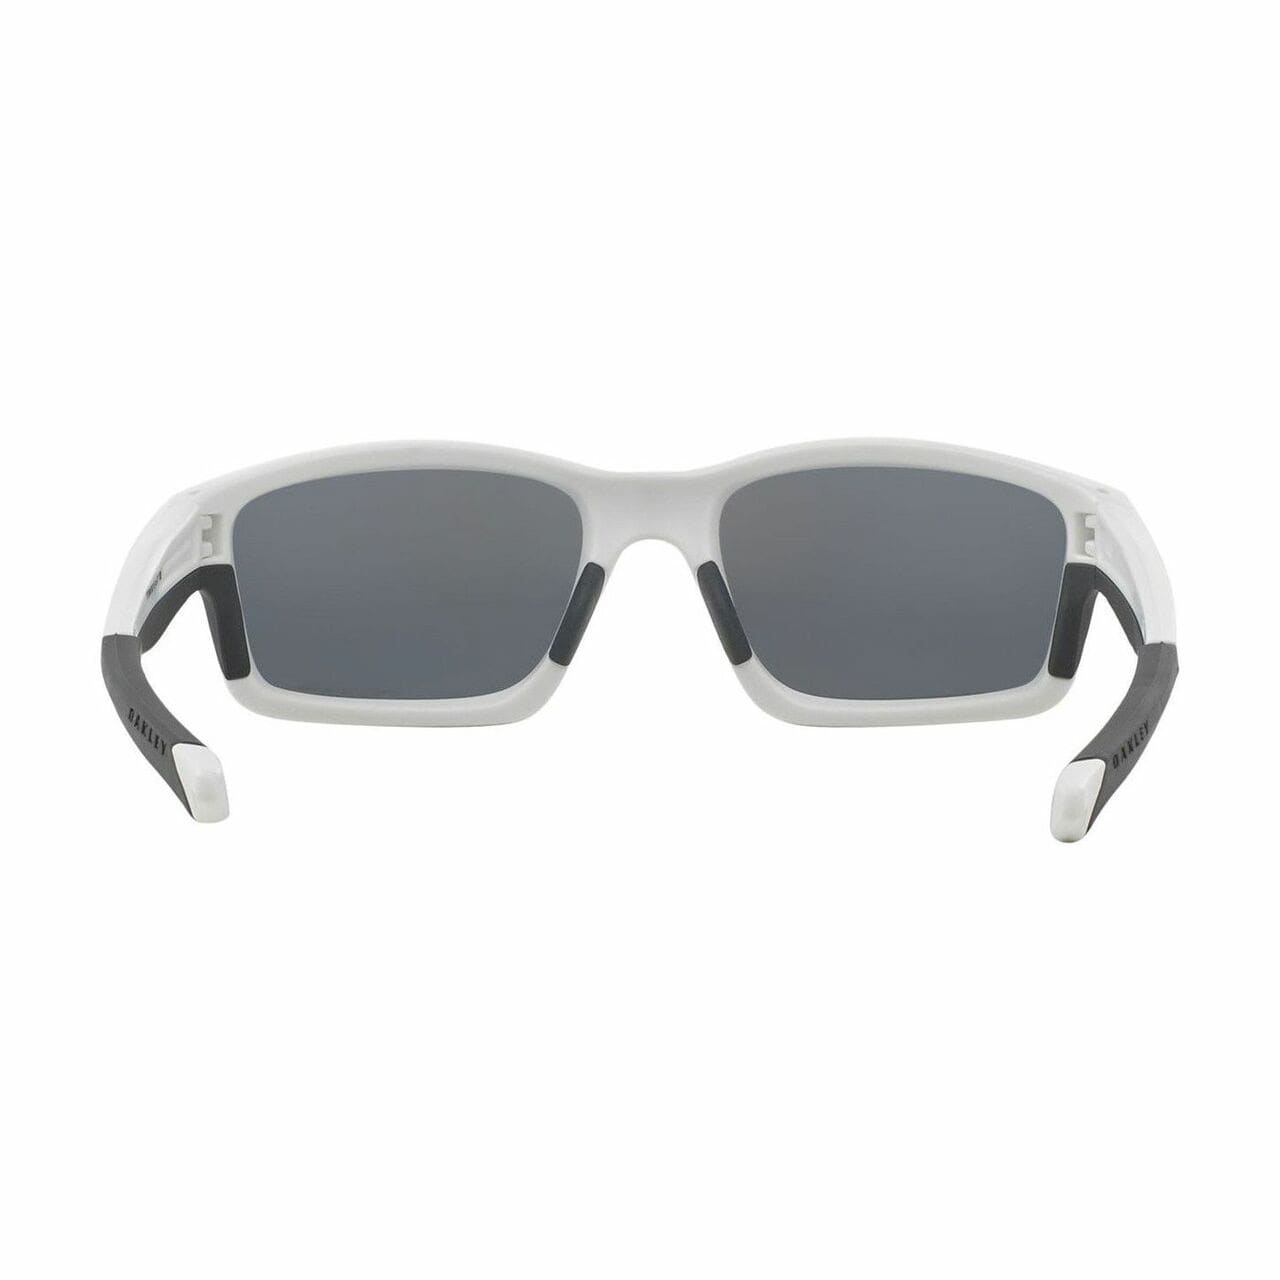 Oakley OO9247-07 Chainlink Matte White Rectangular Grey Polarized Lens Sunglasses 700285910680